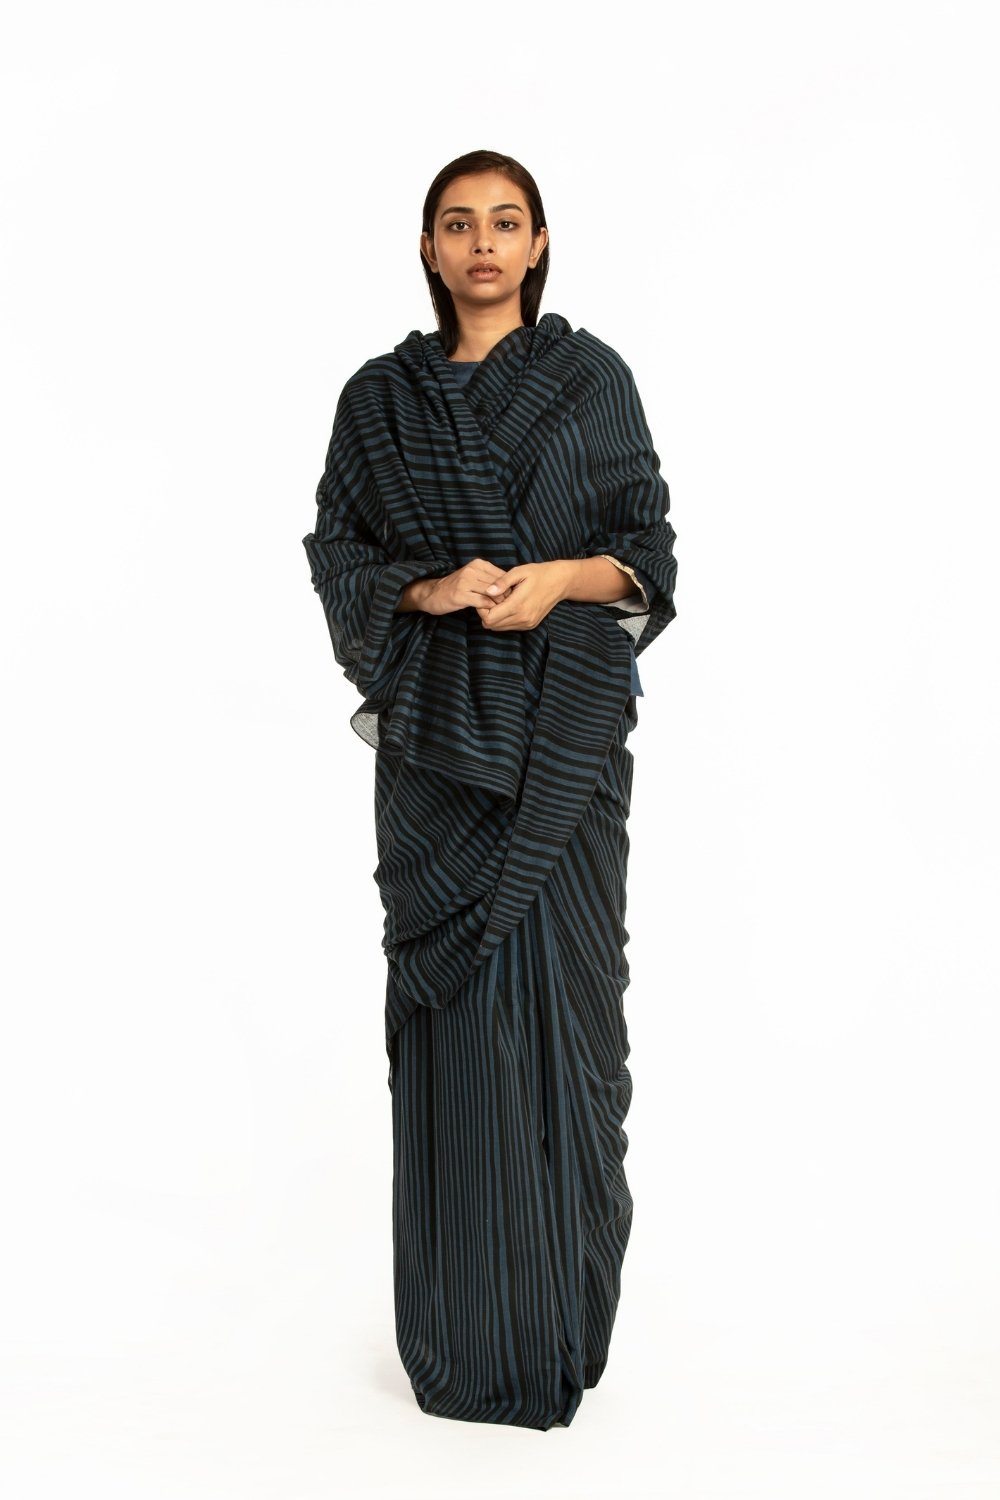 Handwoven Striped Blue Black Cotton Saree Fashion Akaaro 